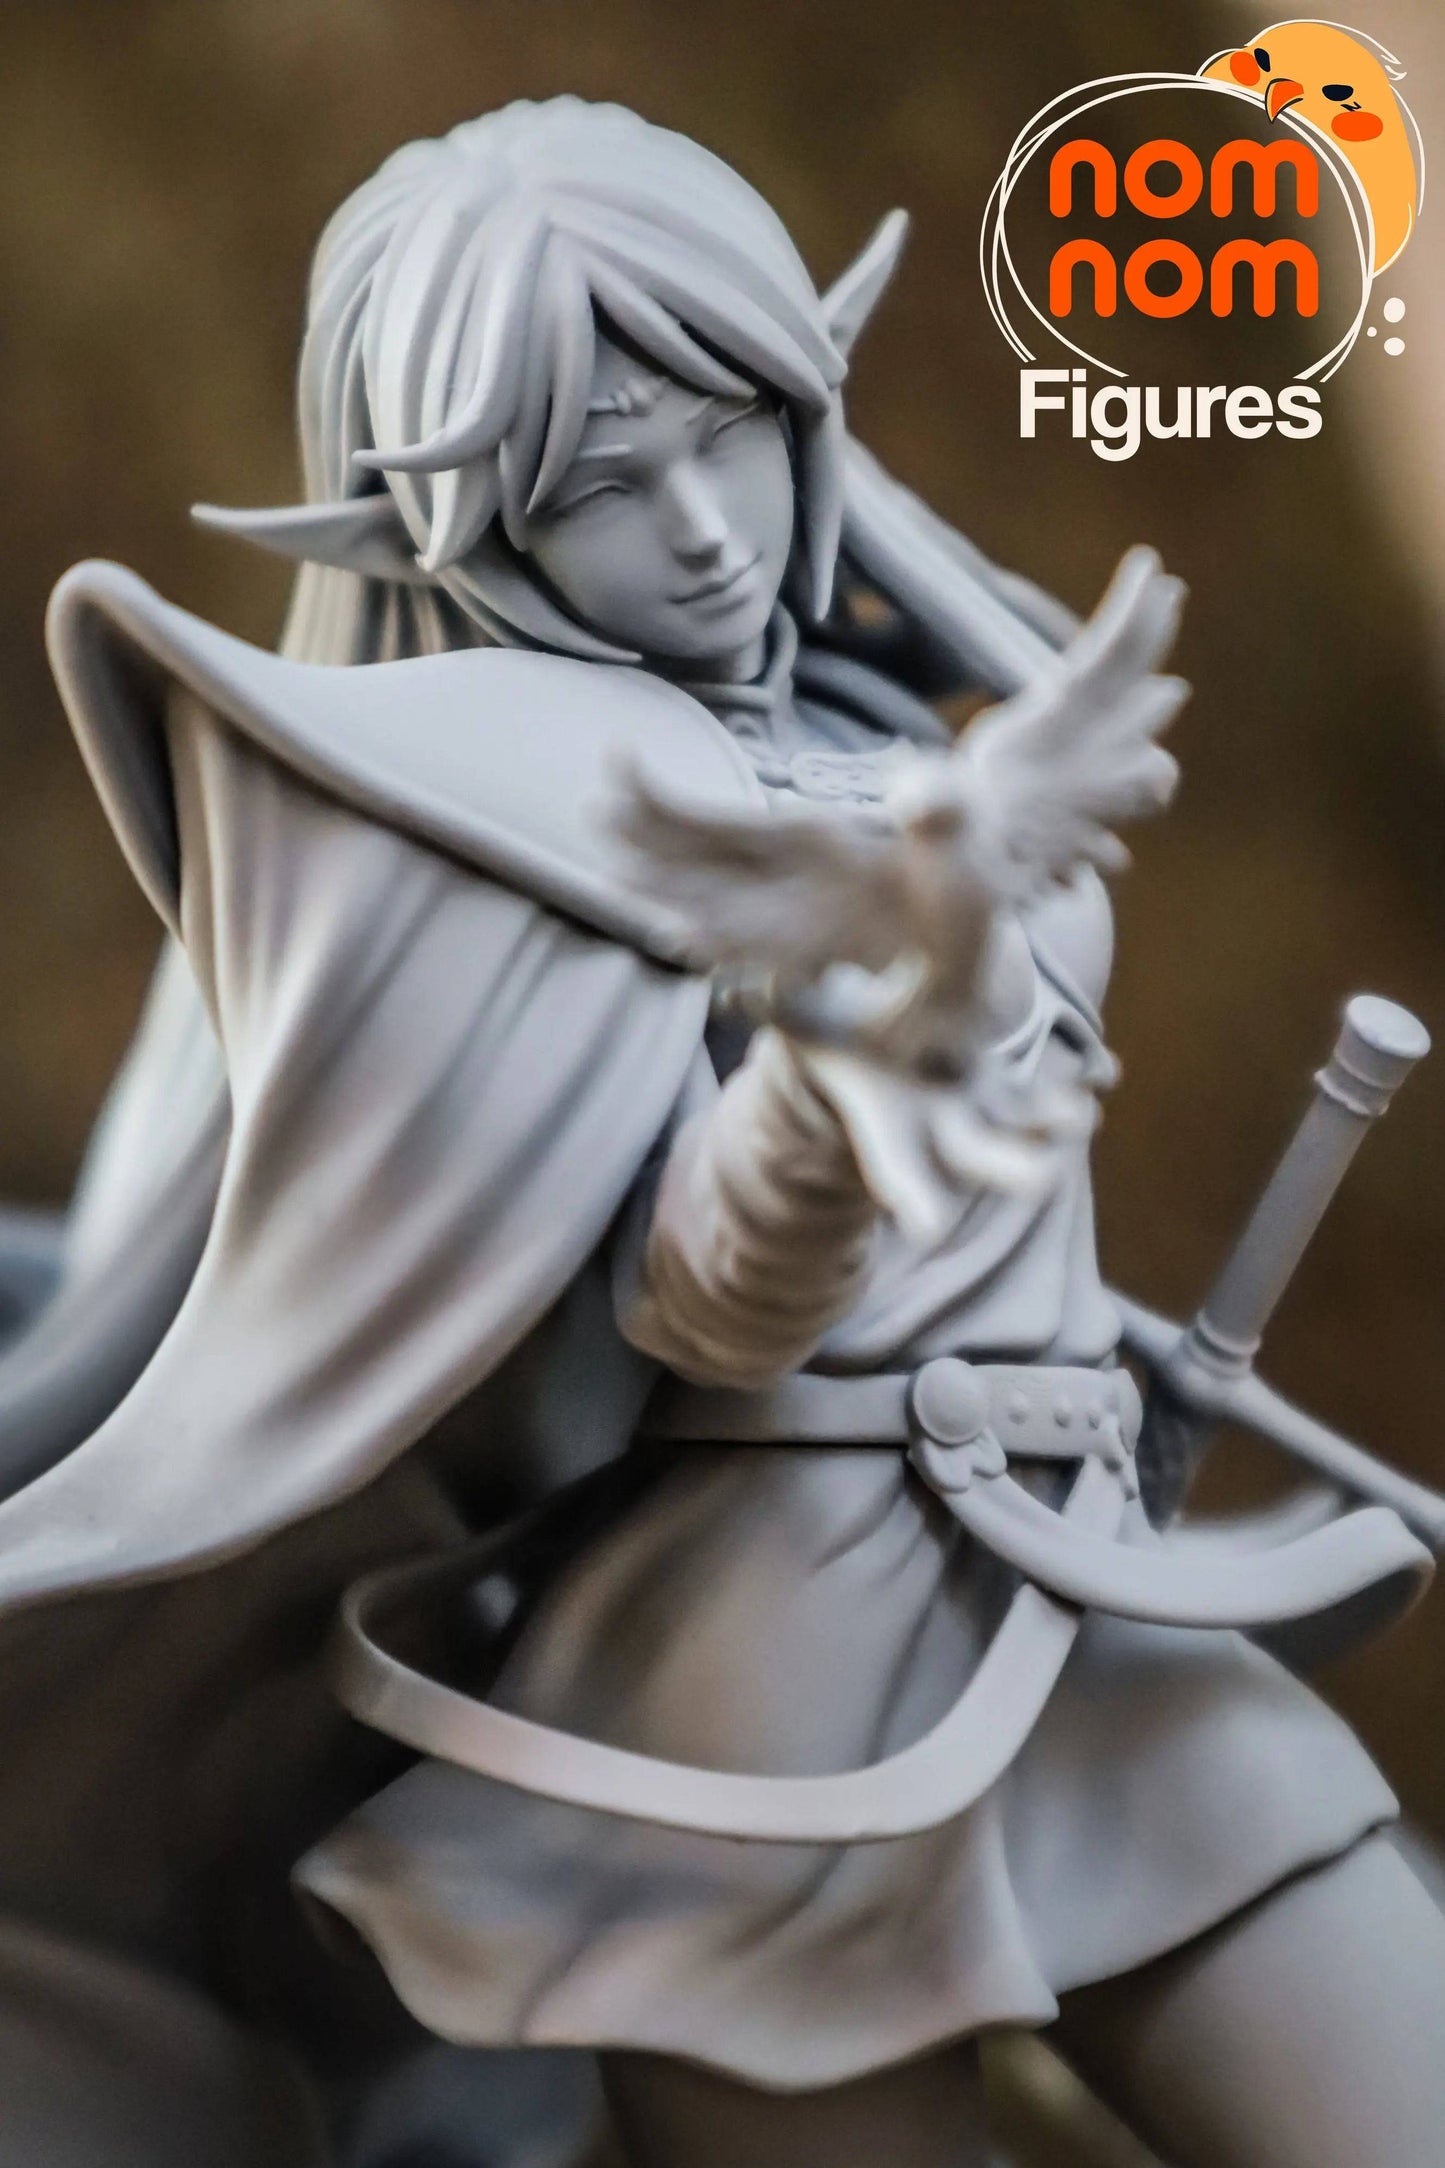 Young High Elf | Resin Garage Kit Sculpture Anime Video Game Fan Art Statue | Nomnom Figures - Tattles Told 3D